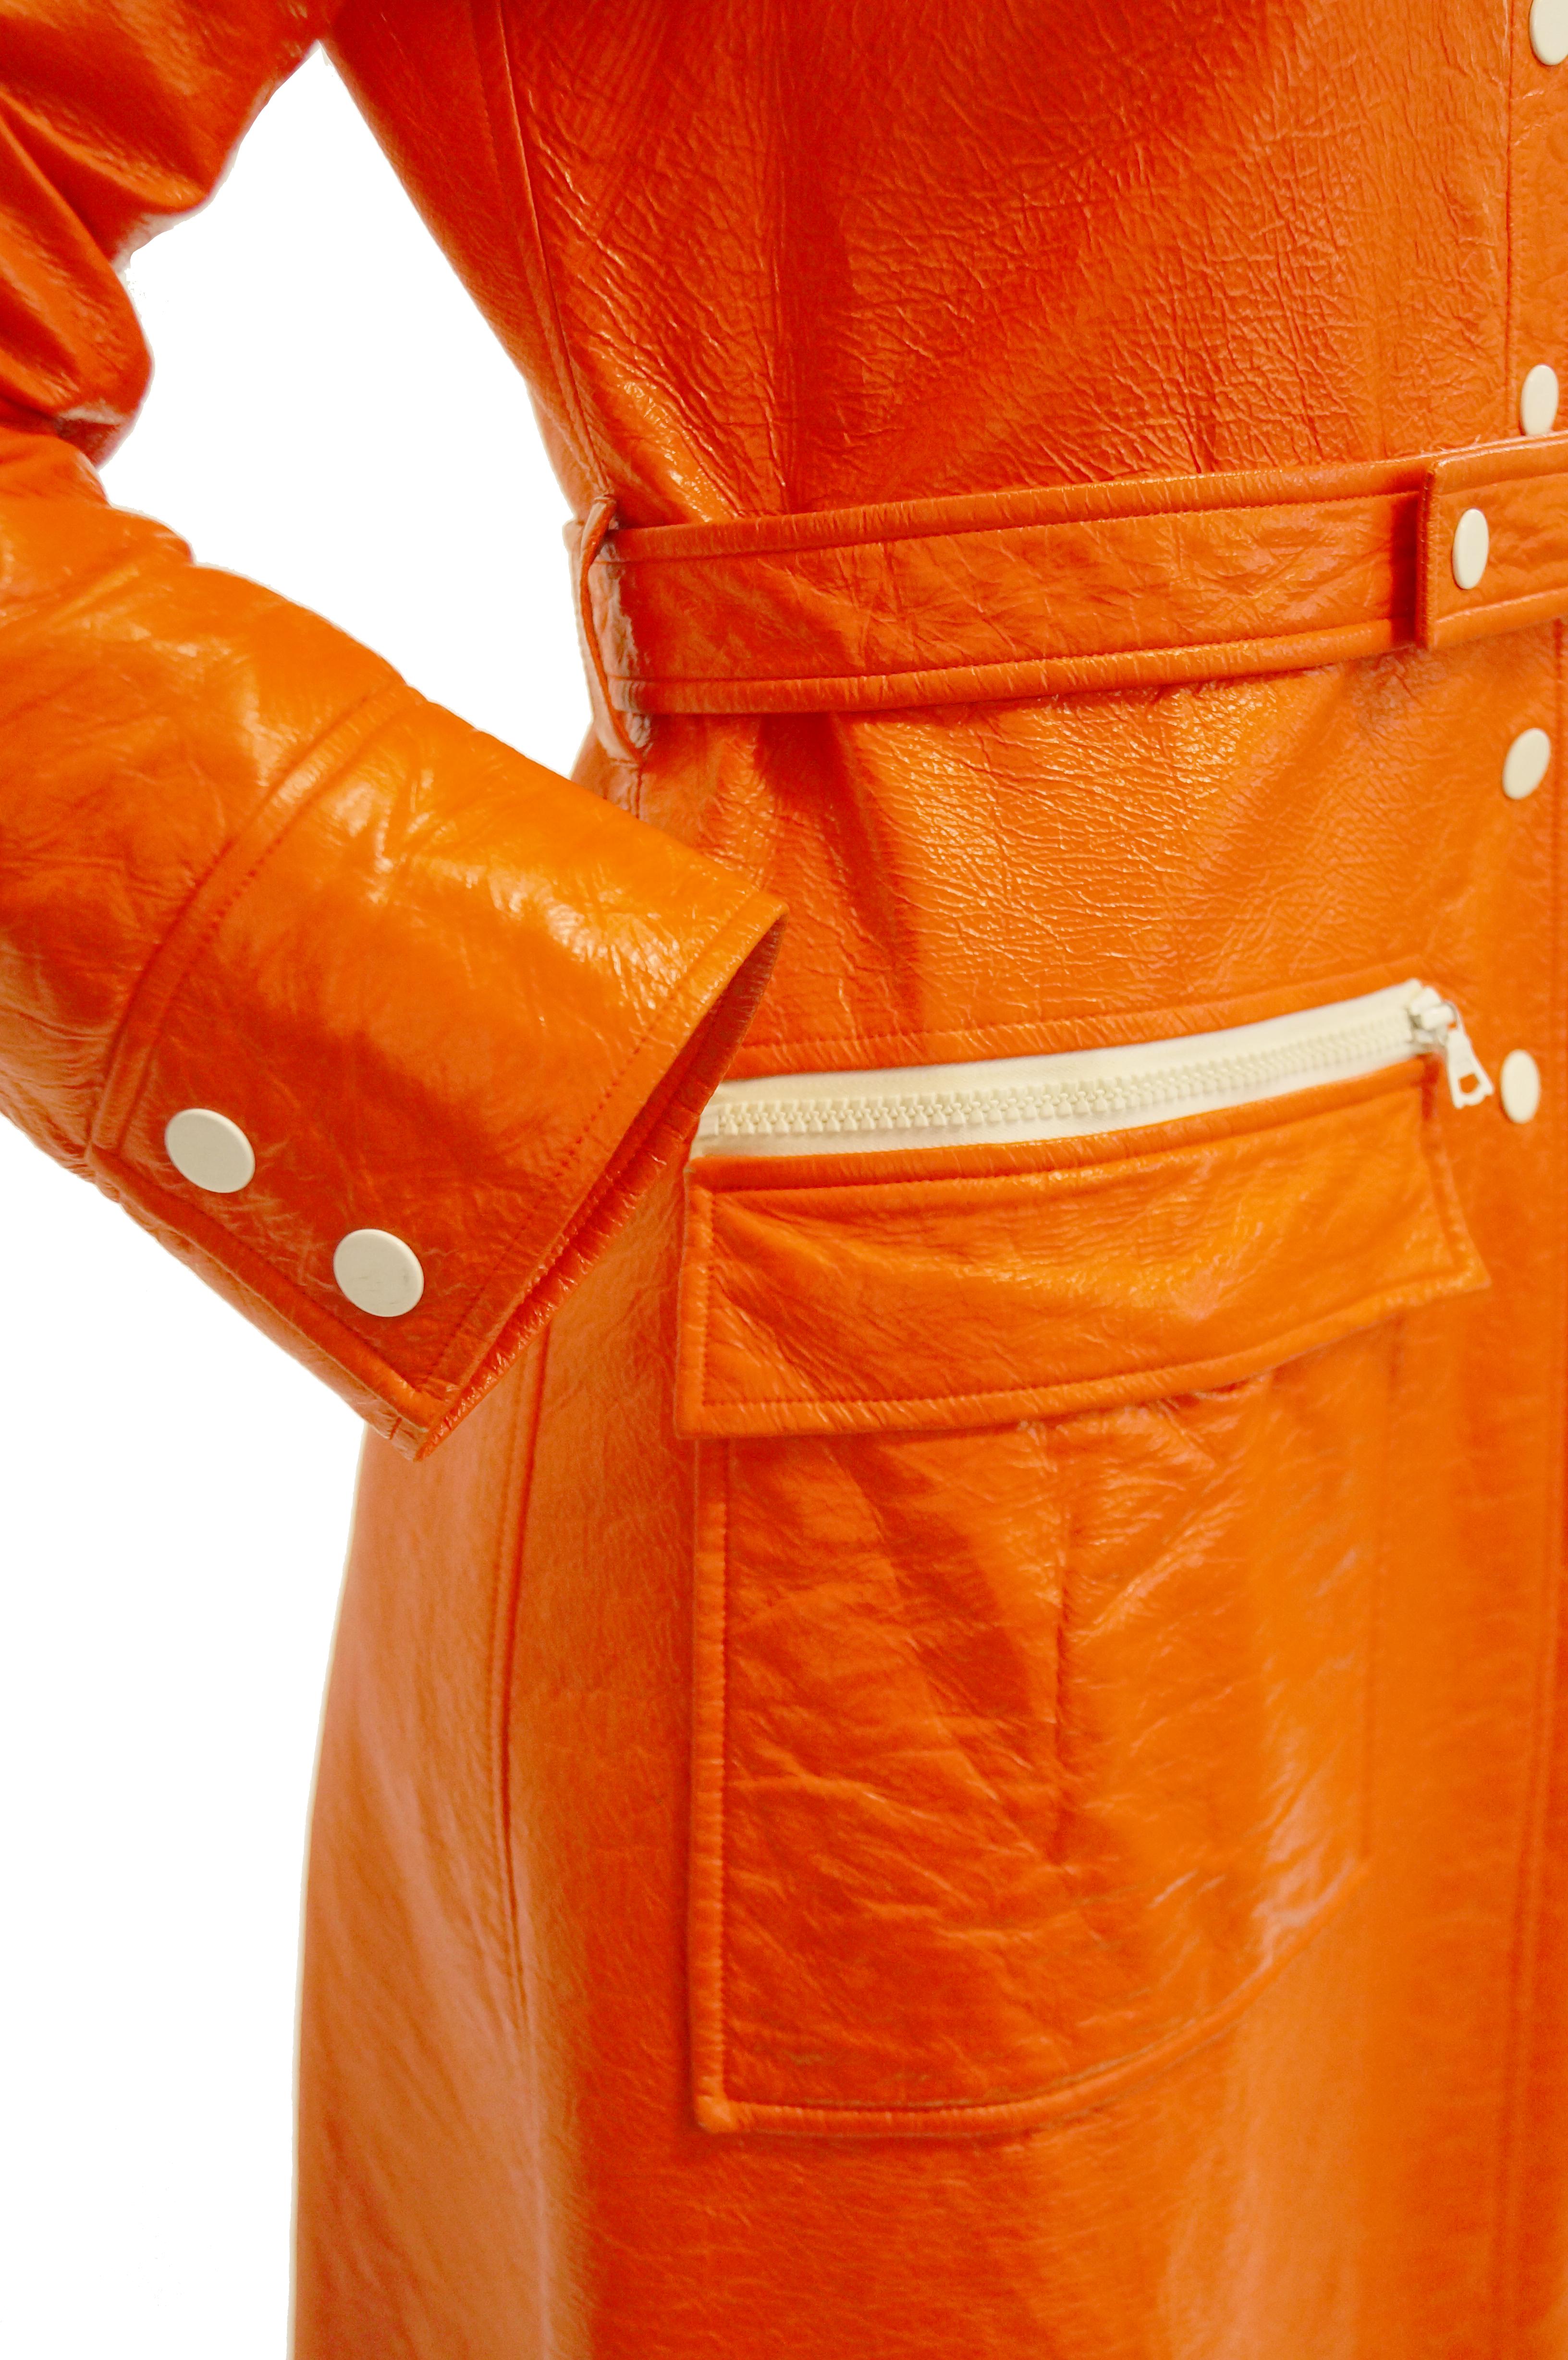 orange vinyl jacket